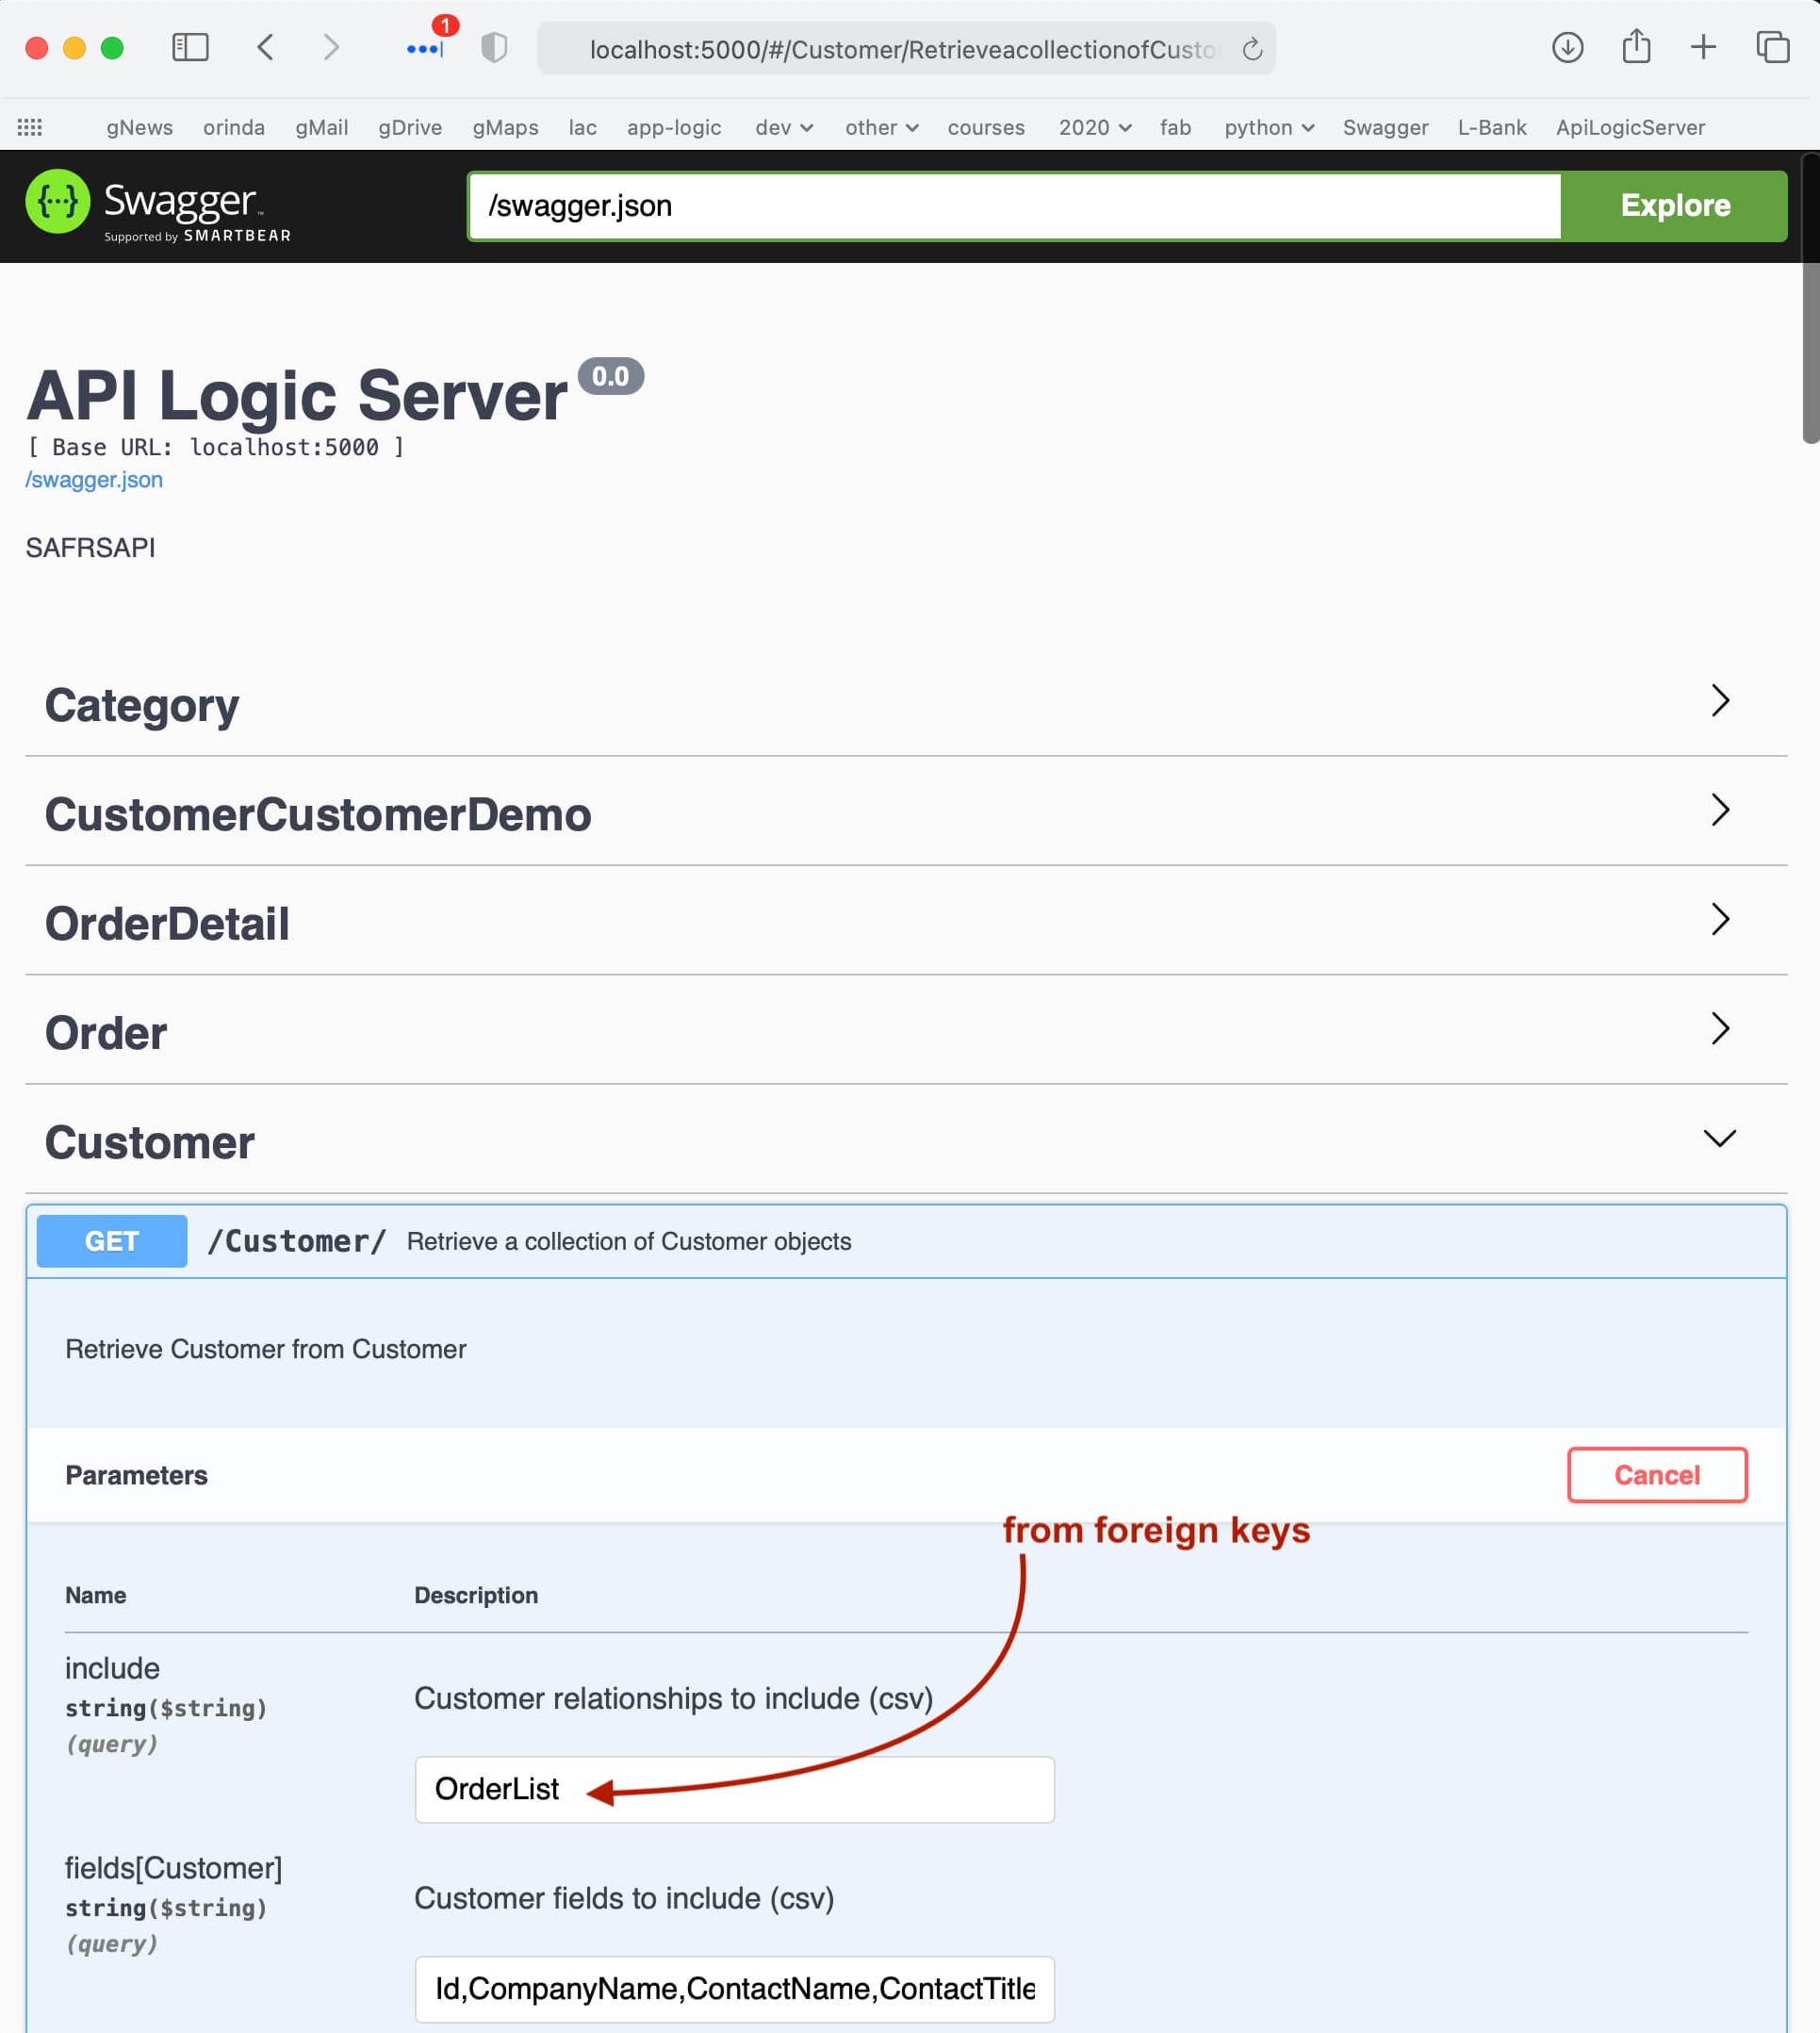 API Logic Server on Swagger